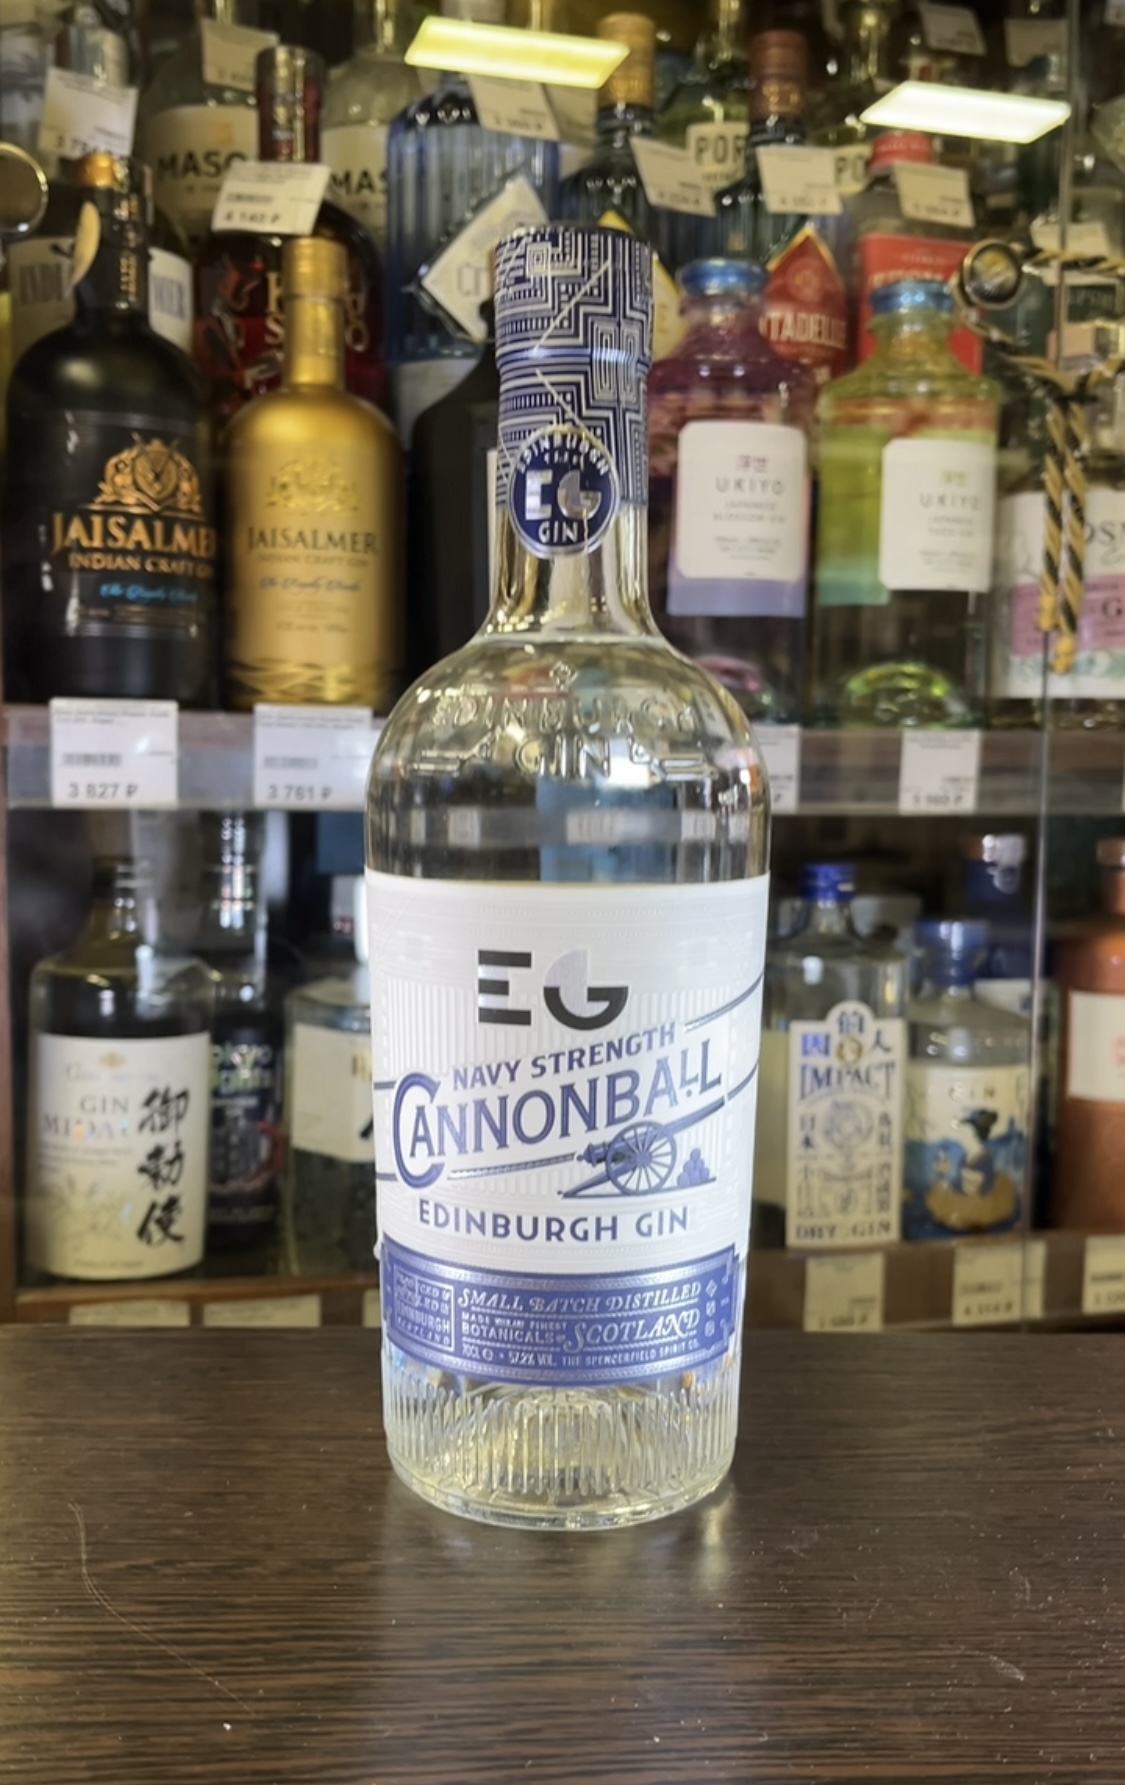 Edinburgh Gin Cannonball Navy Strength Джин Эдинбург Джин Каннонбал Нави Стренгт 0.7л